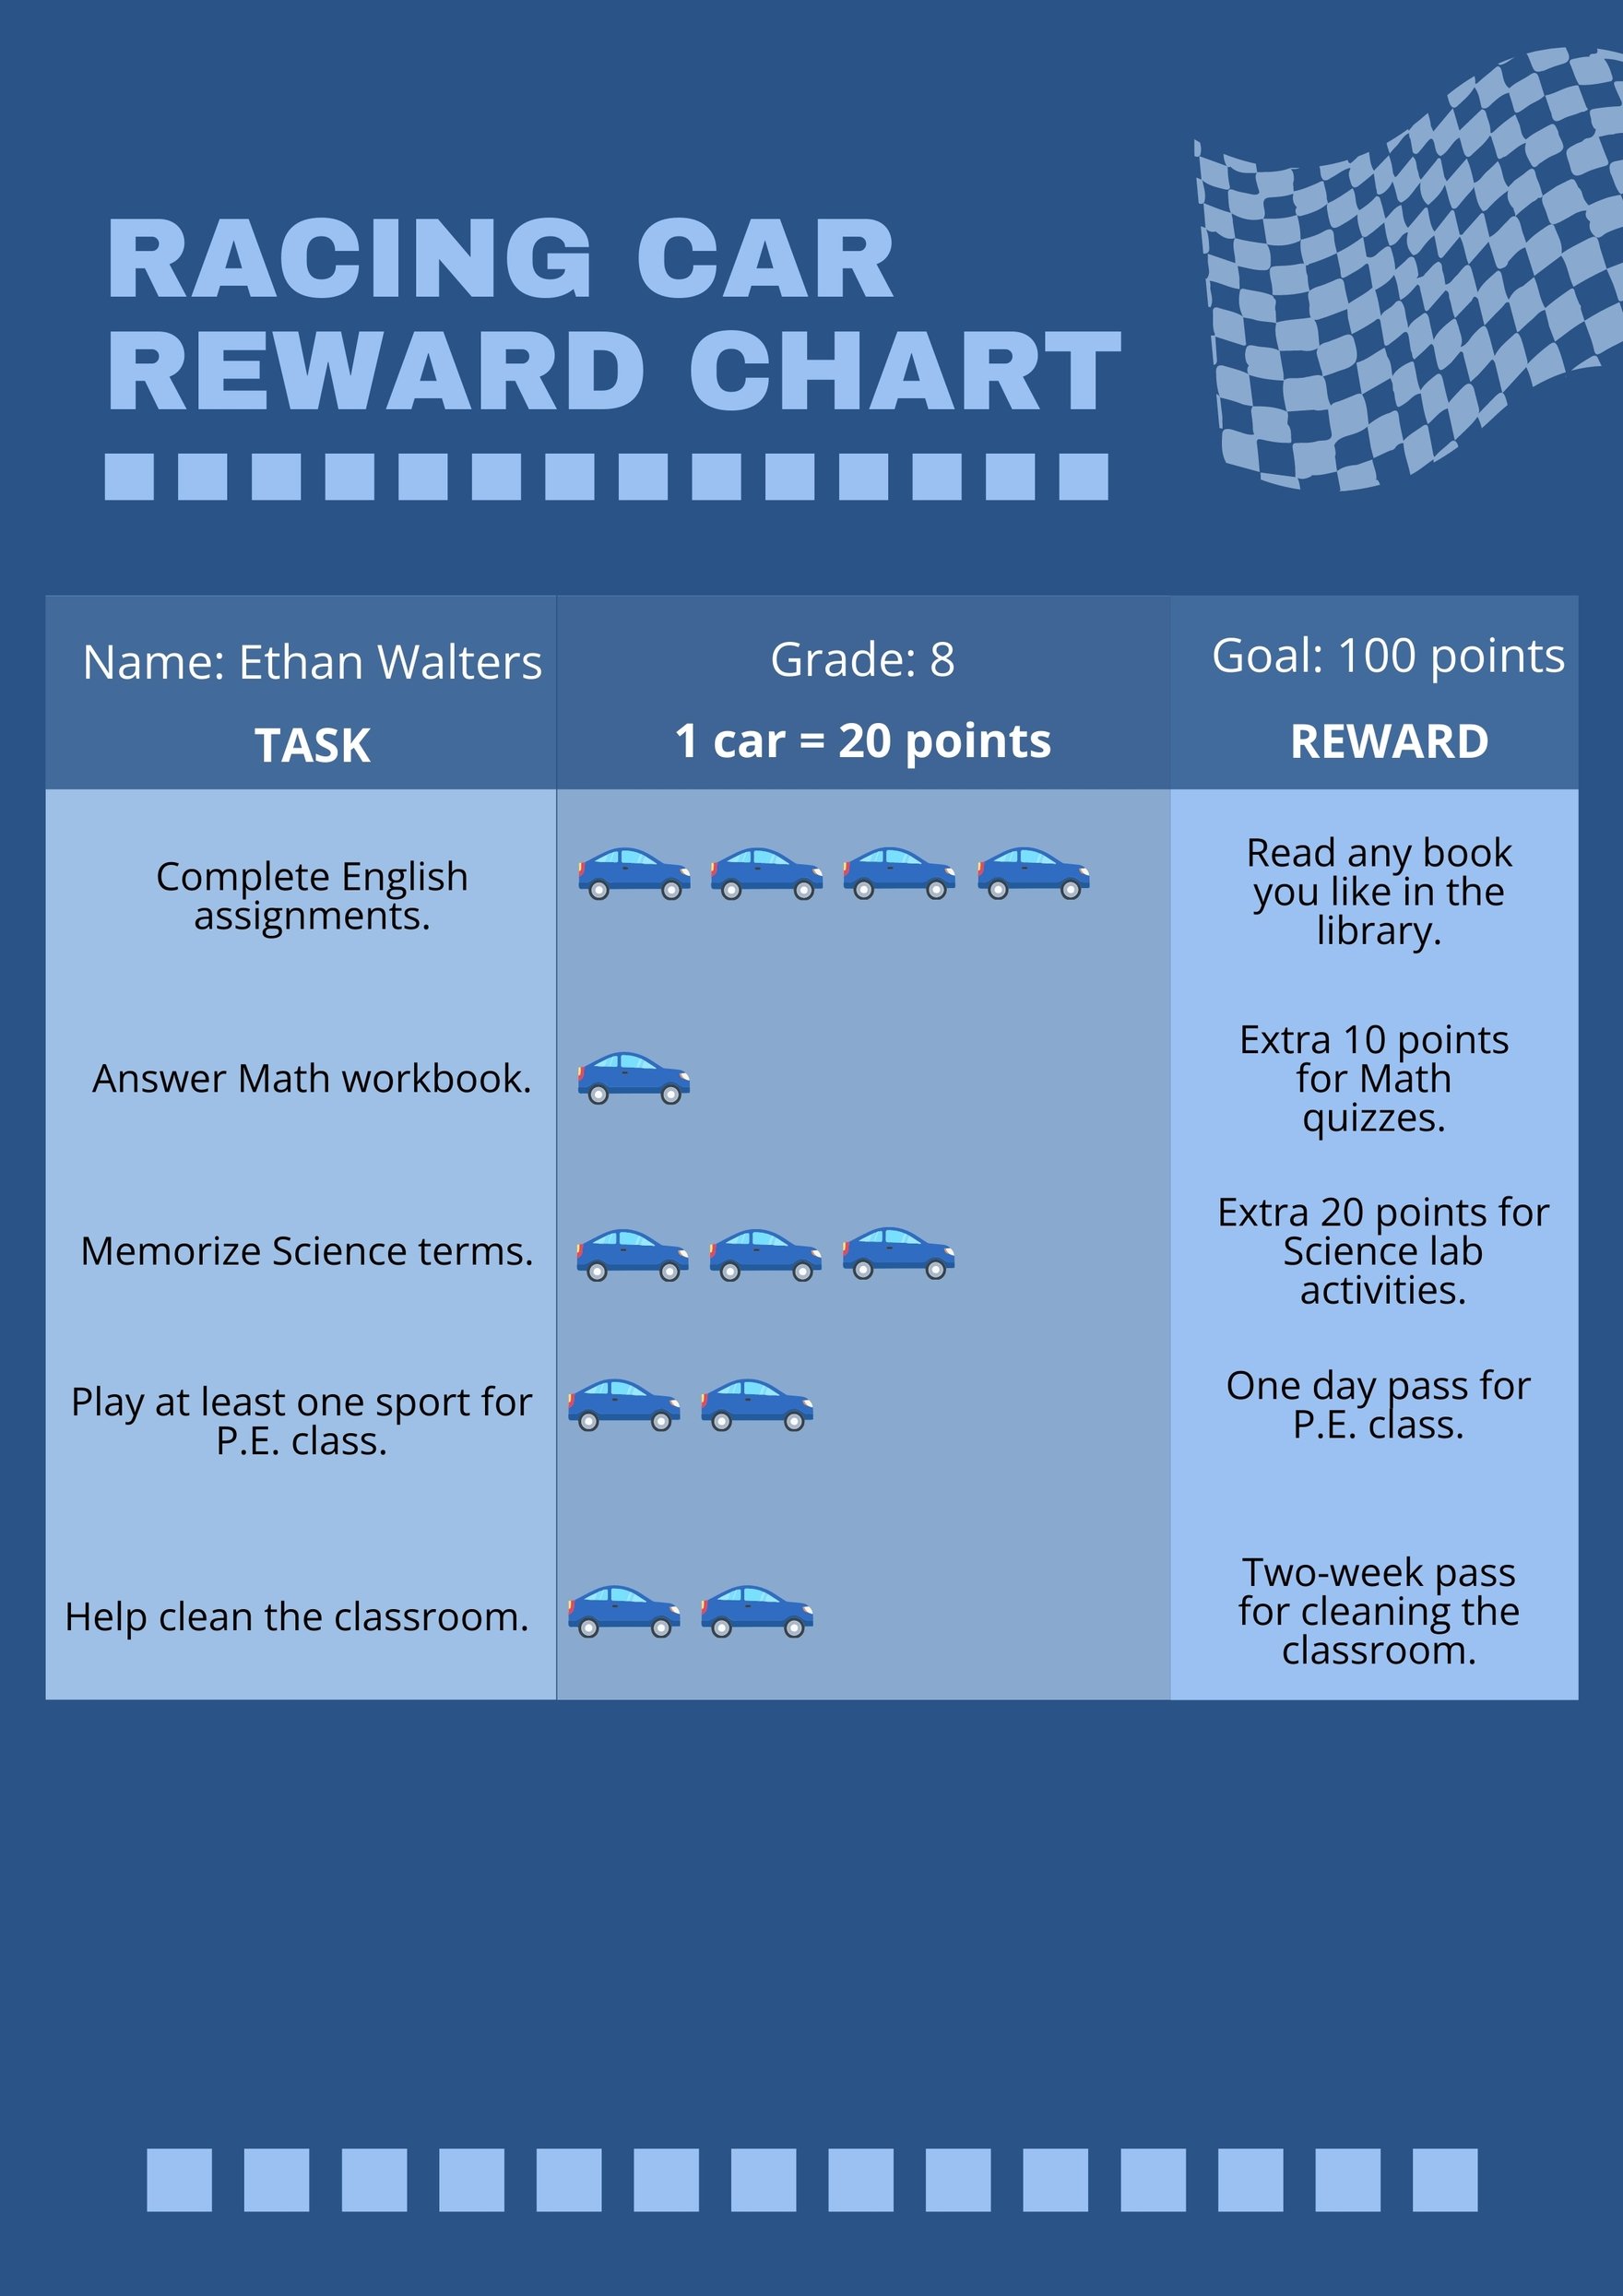 Racing Car Reward Chart in PDF, Illustrator